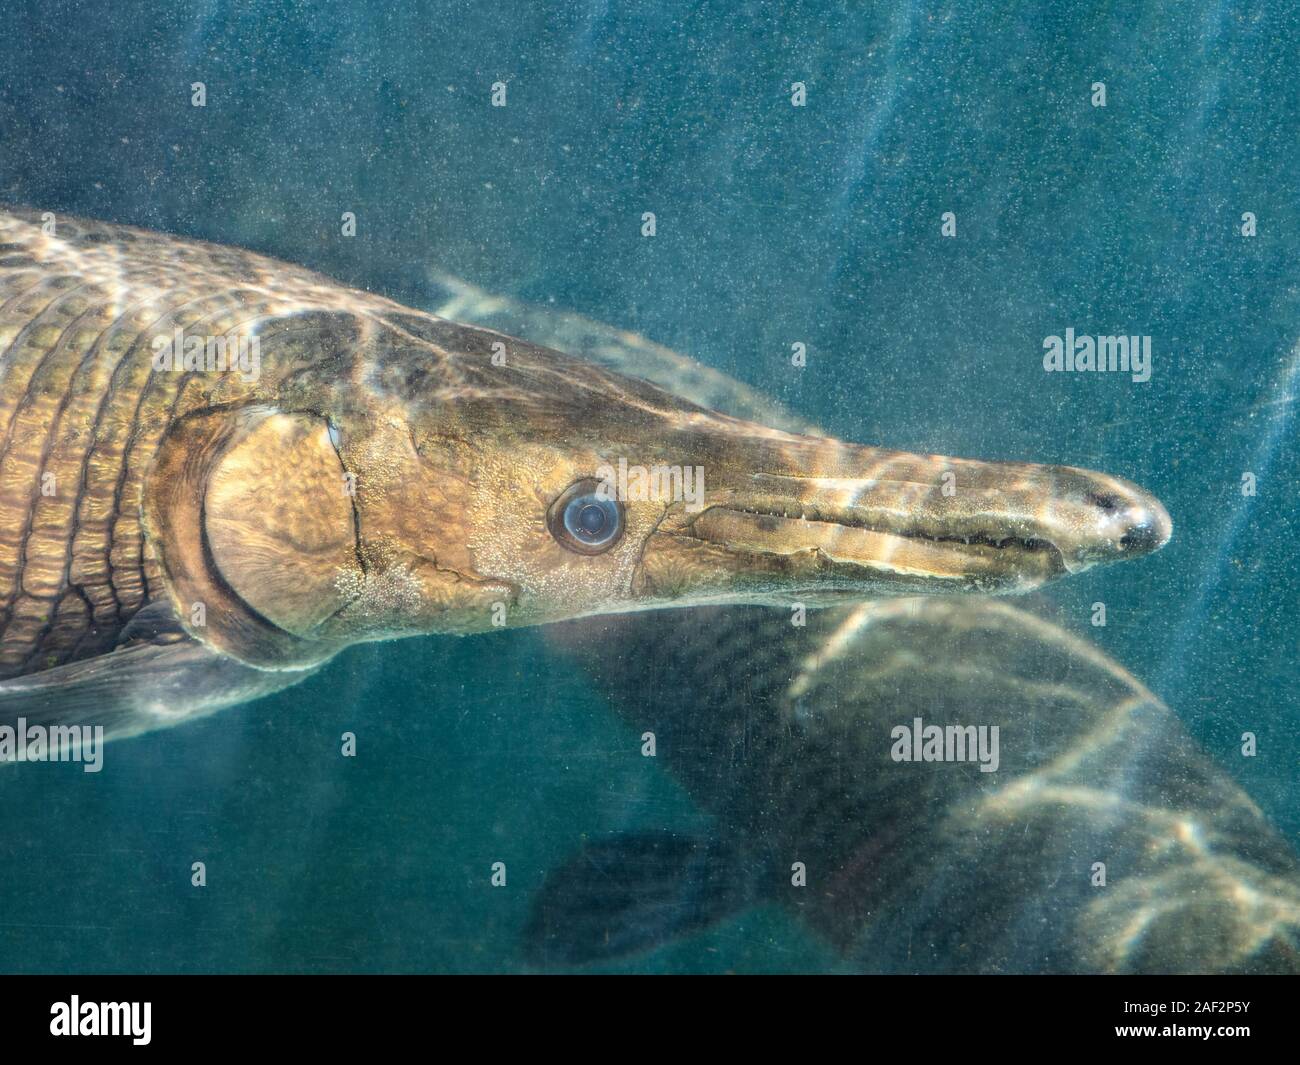 Closeup Alligator Gar or Atractosteus spatula Swimming Underwater Stock Photo